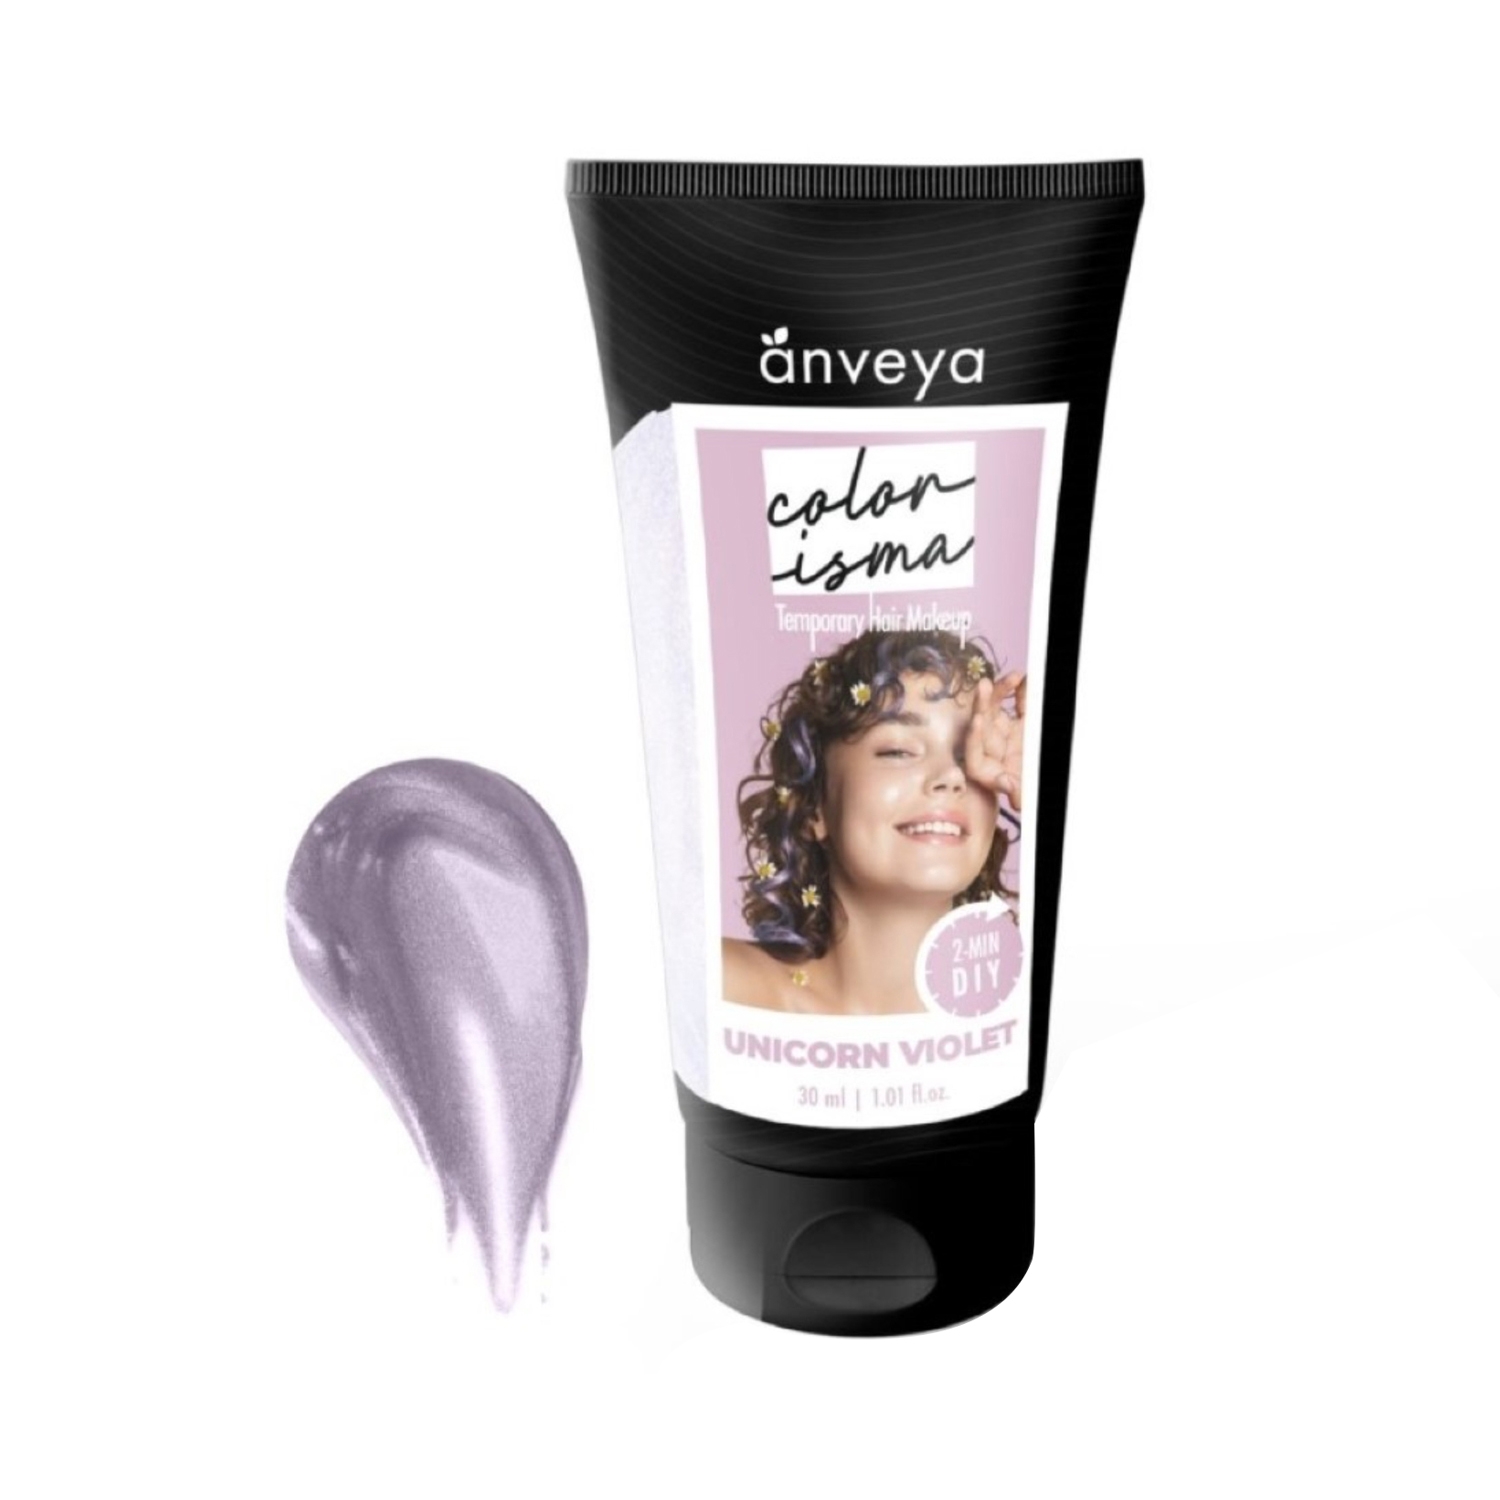 Anveya | Anveya Colorisma Hair Color Makeup - Unicorn Violet (30ml)